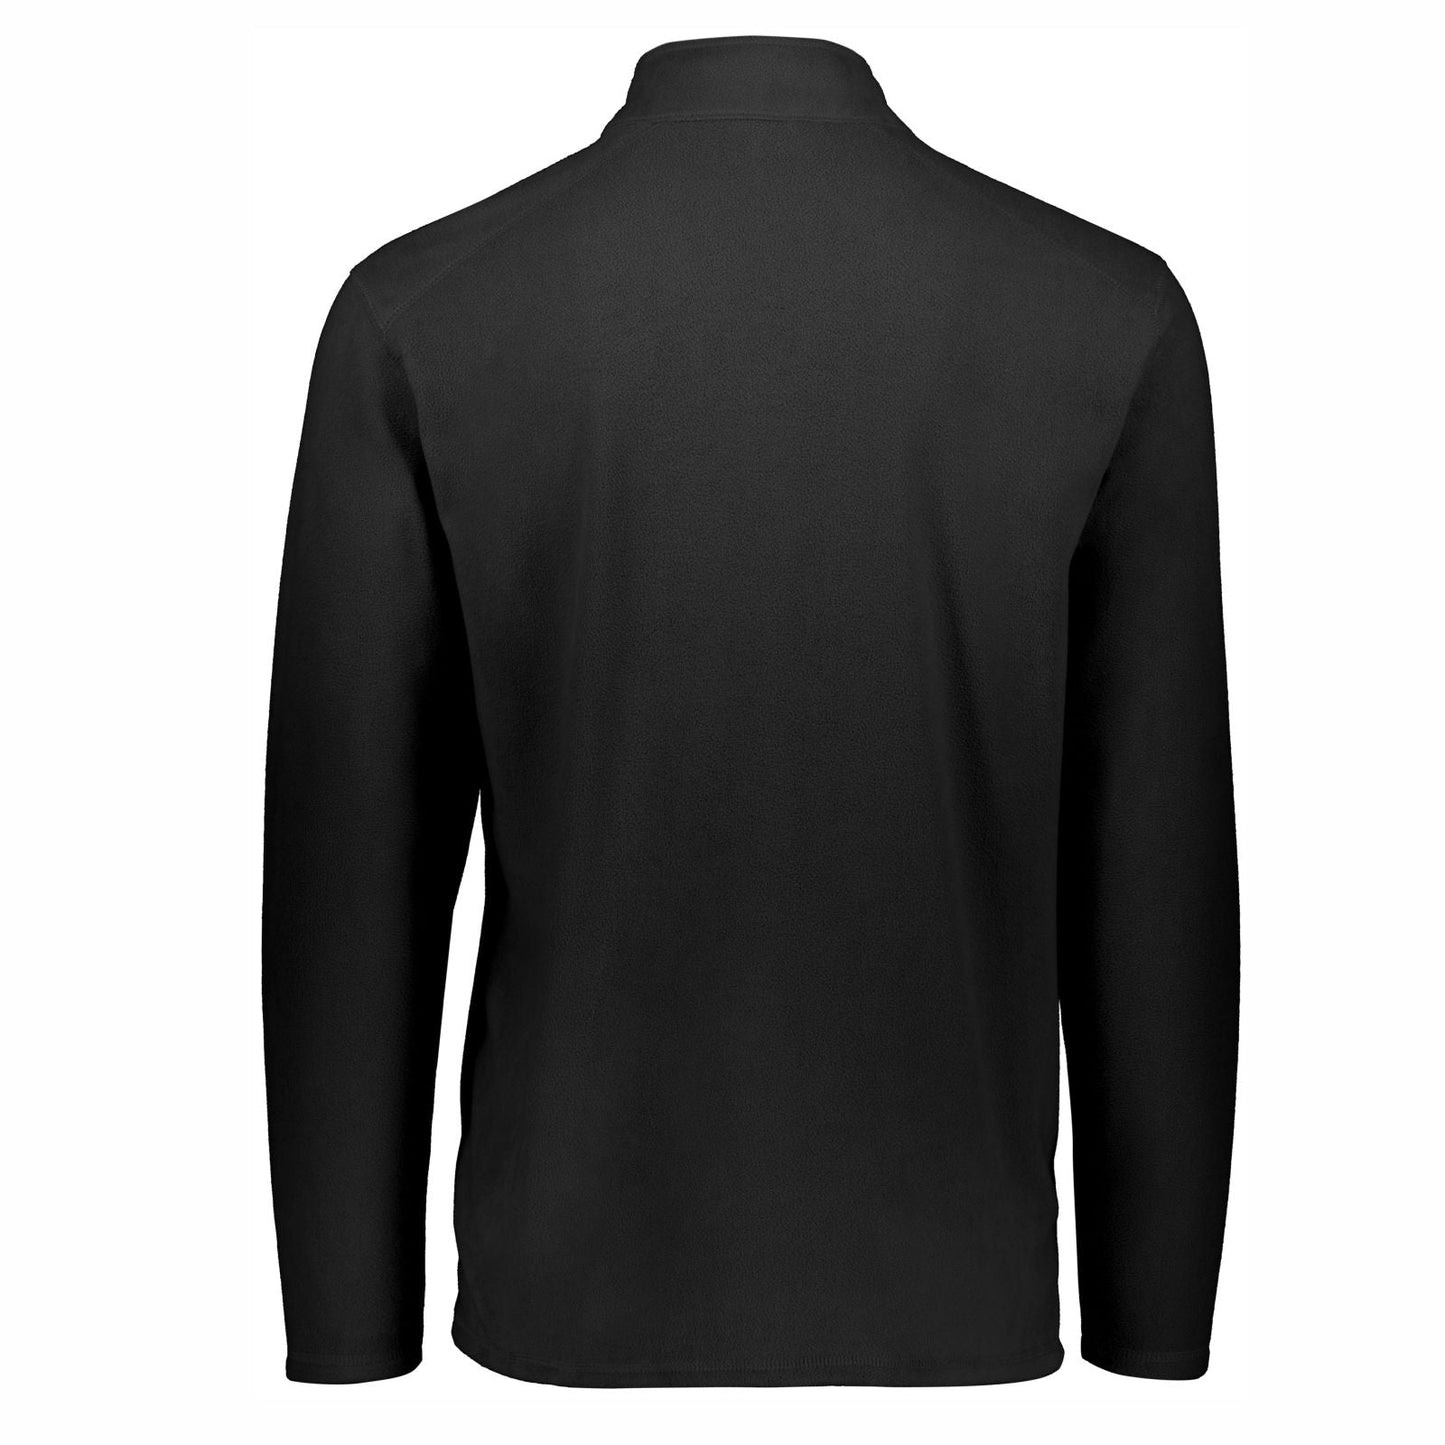 MBH Men's Eco Fleece 1/4 Zip -Black- Embroidery